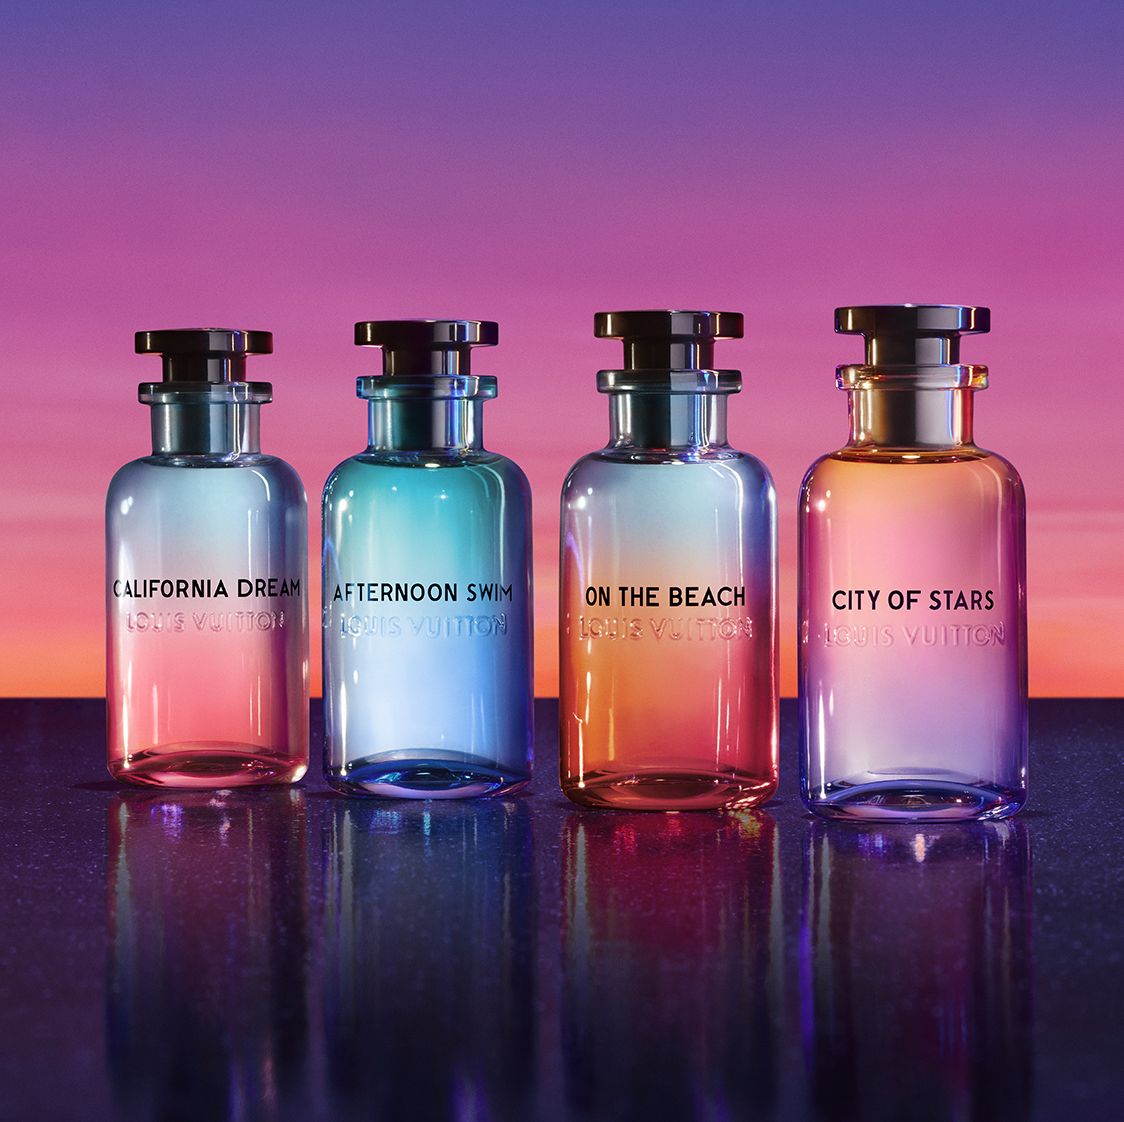 Louis Vuitton City Of Star EDP | My Perfume Shop Australia